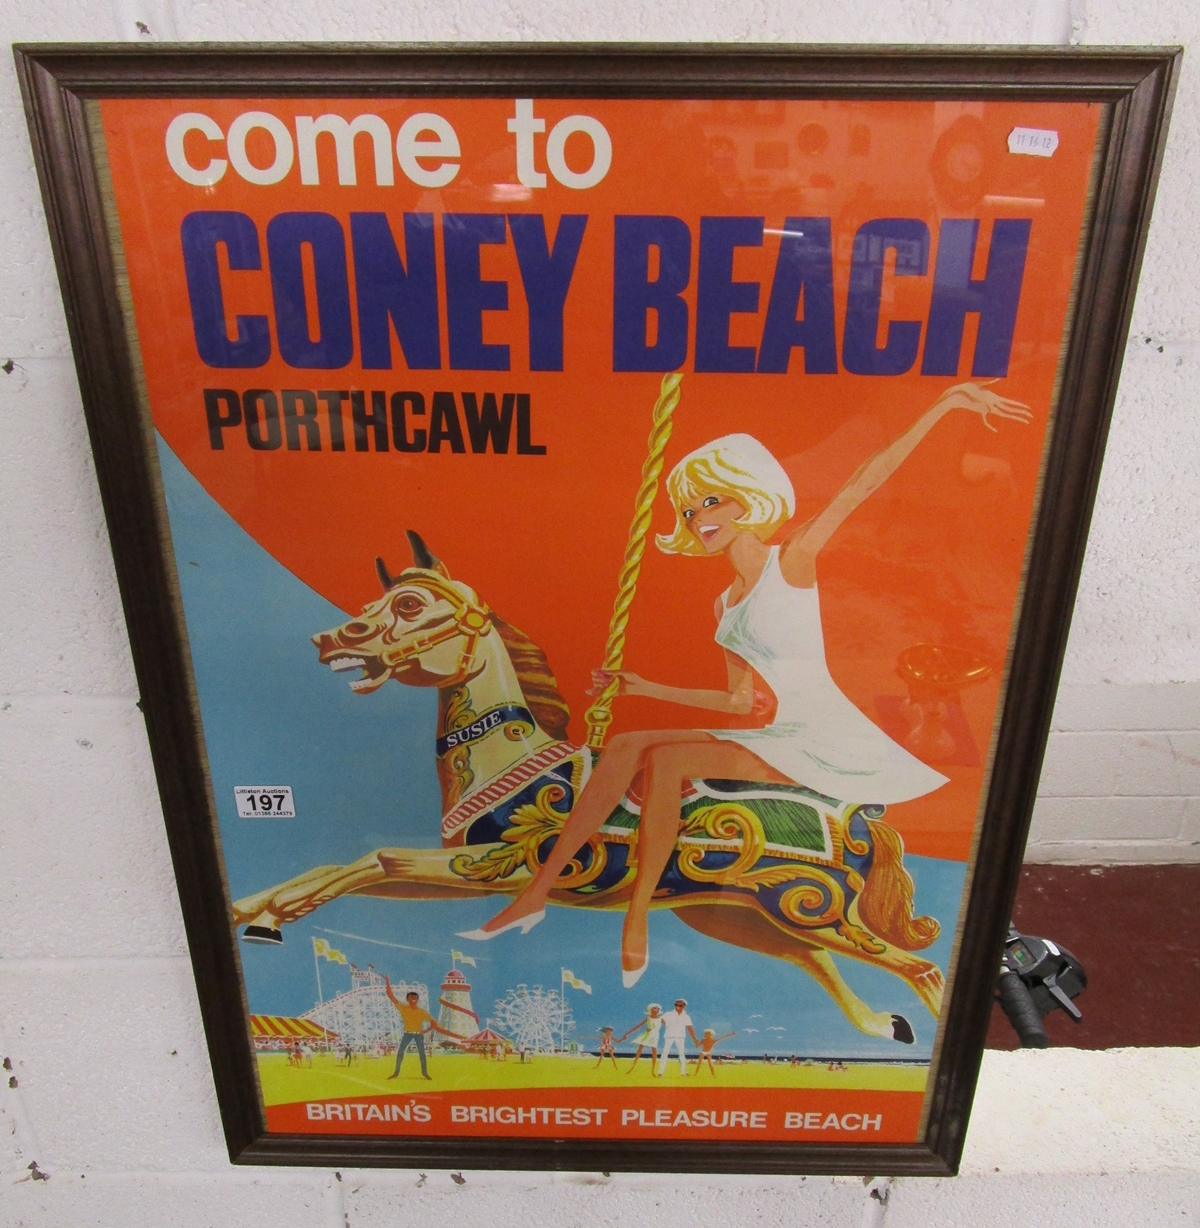 Original 1960's Railway poster - Coney beach, Porthcawl